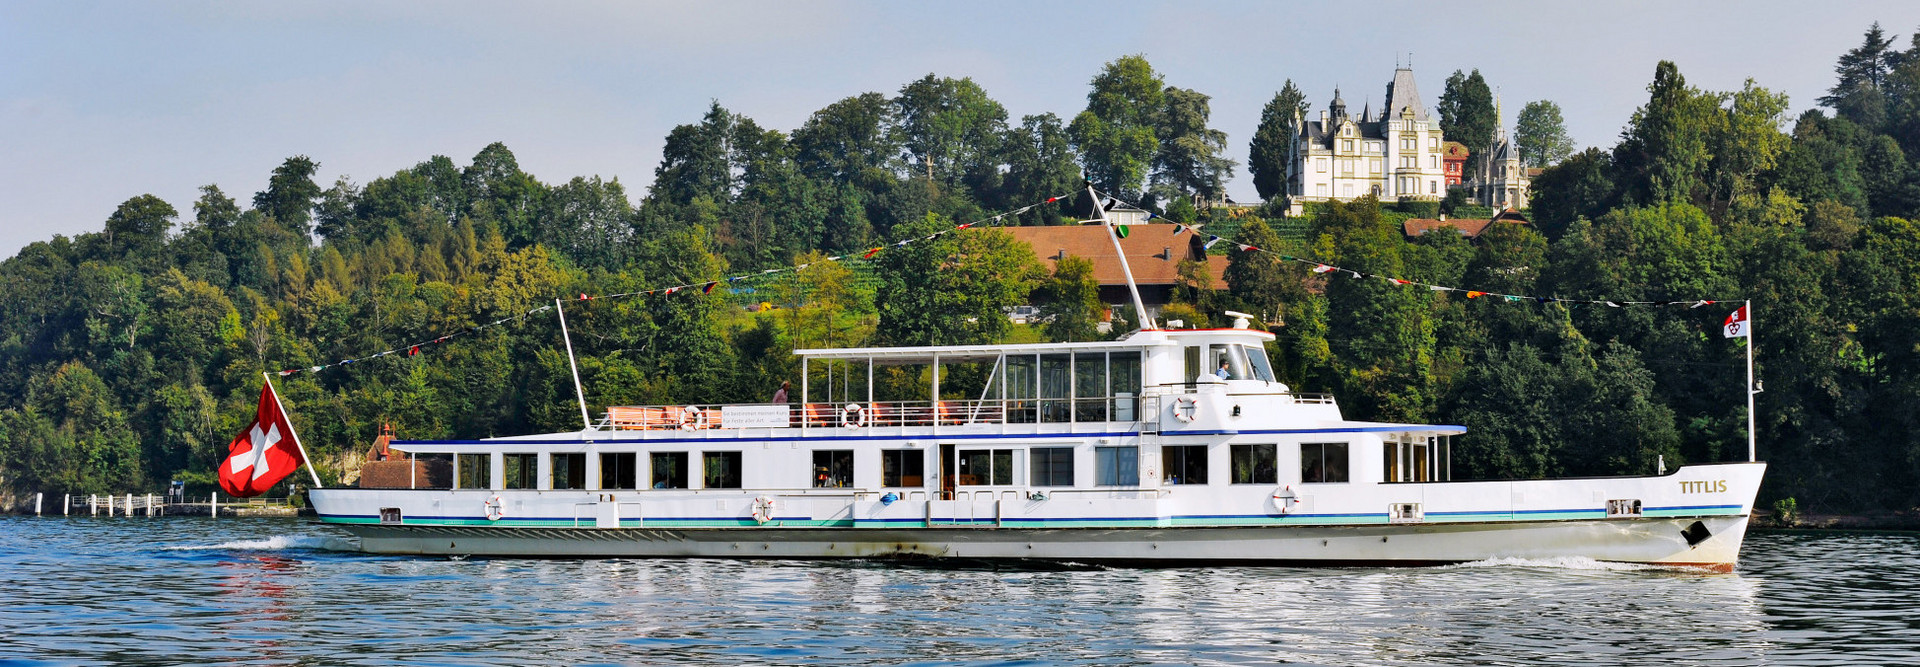 The motor vessel Titlis sails on Lake Lucerne in fine weather.